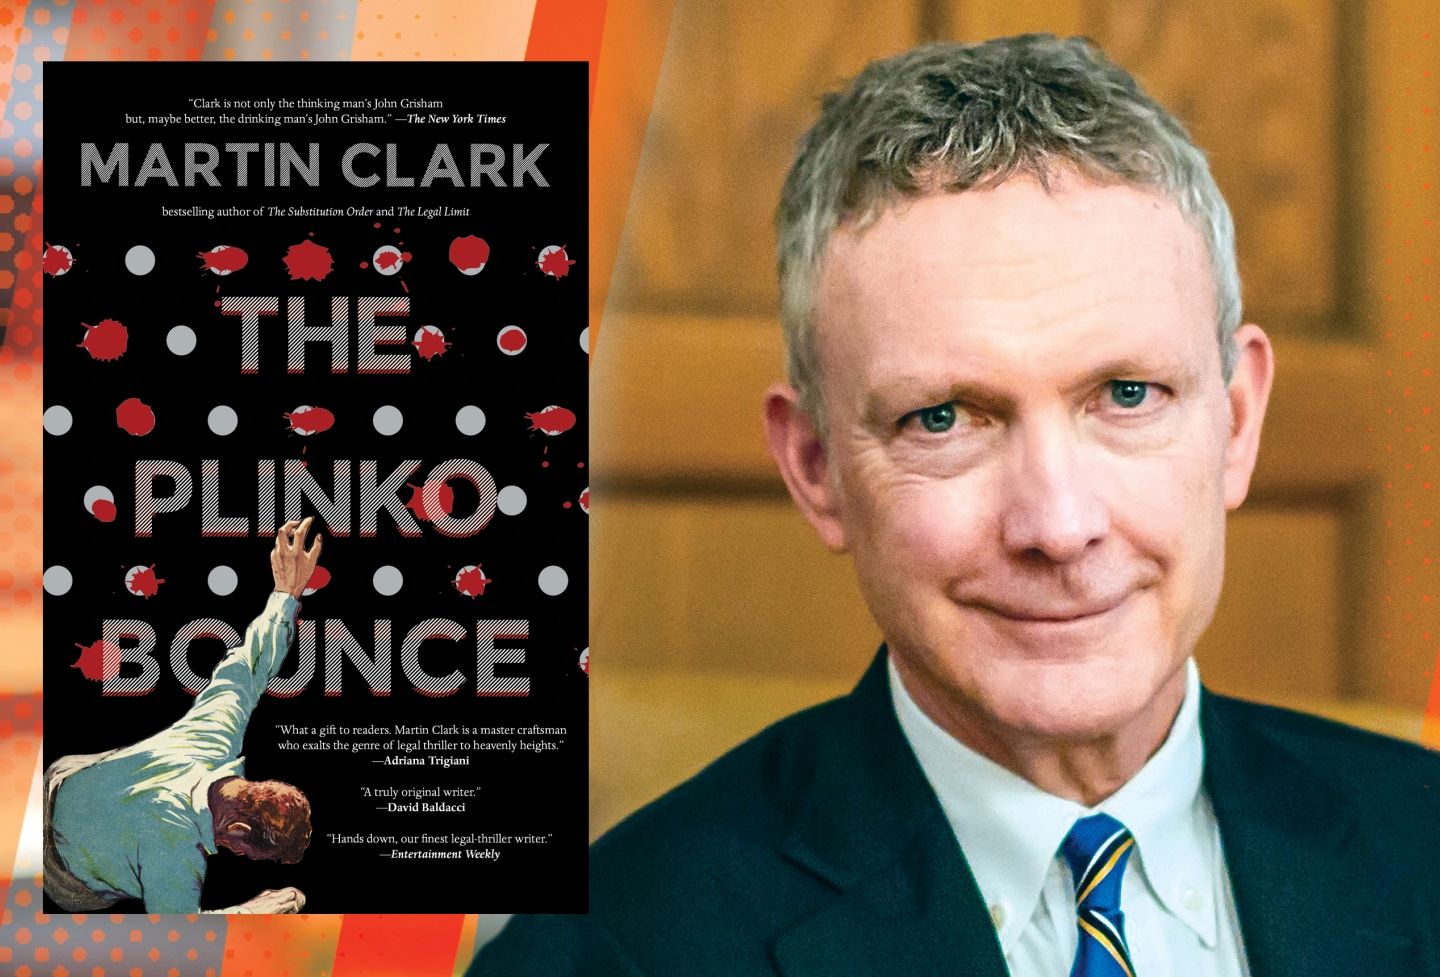 Martin Clark and "The Plinko Bounce"